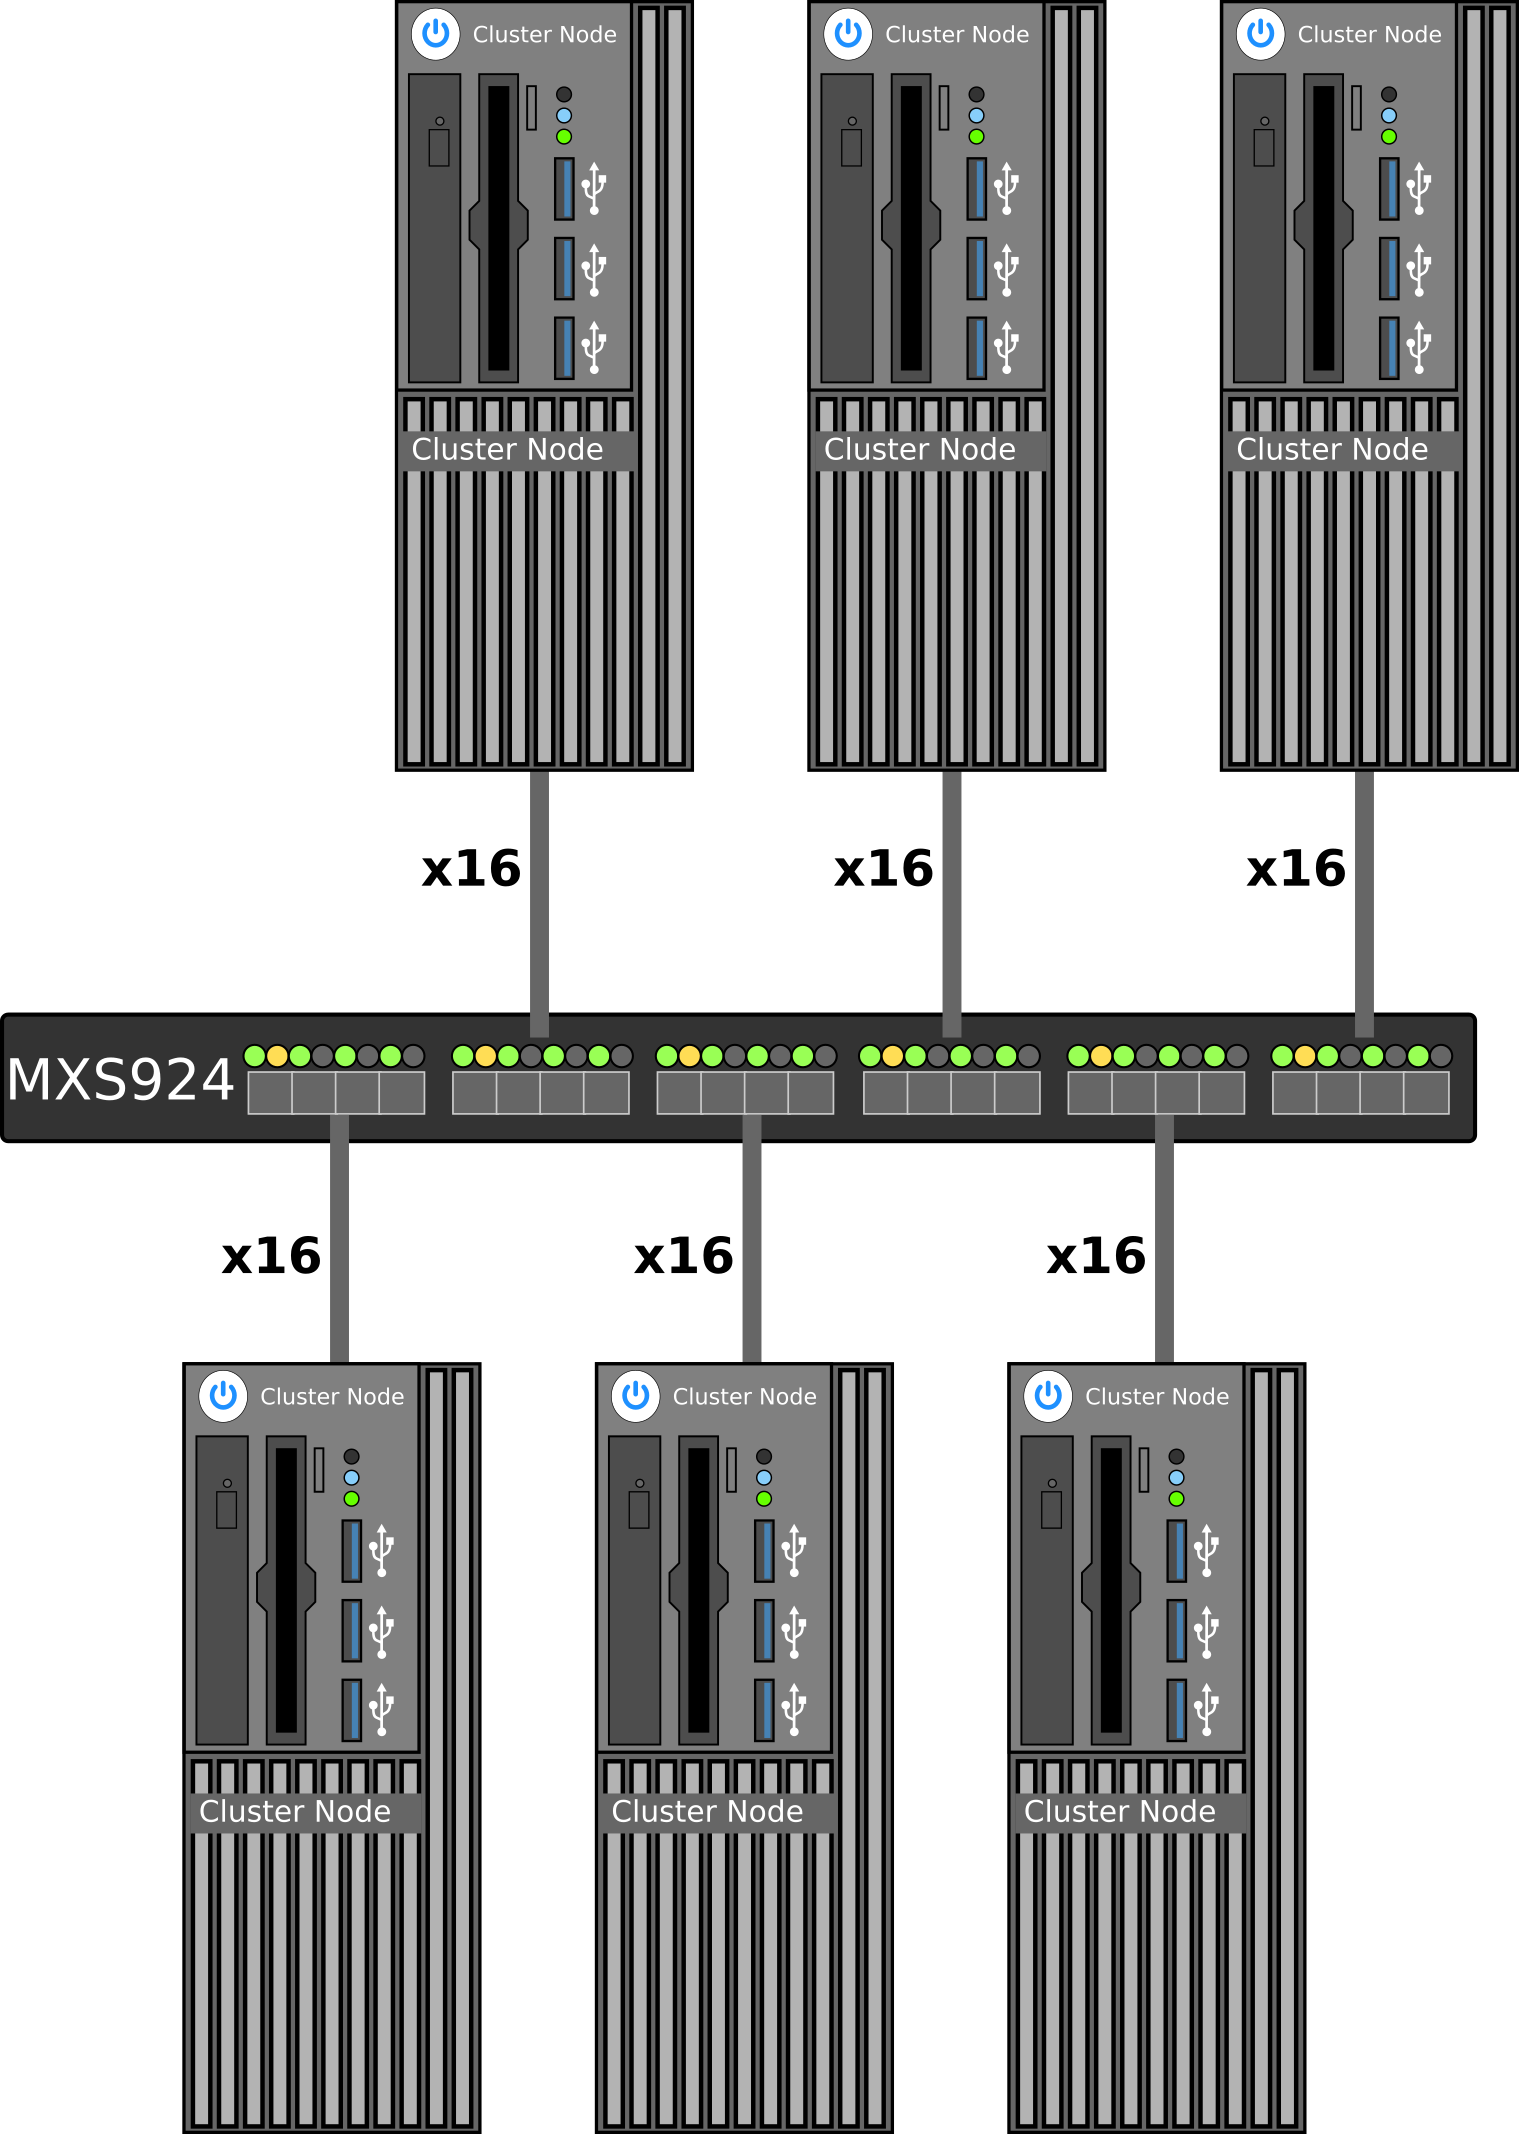 MXS924 PCI Express switch 6 node configuration